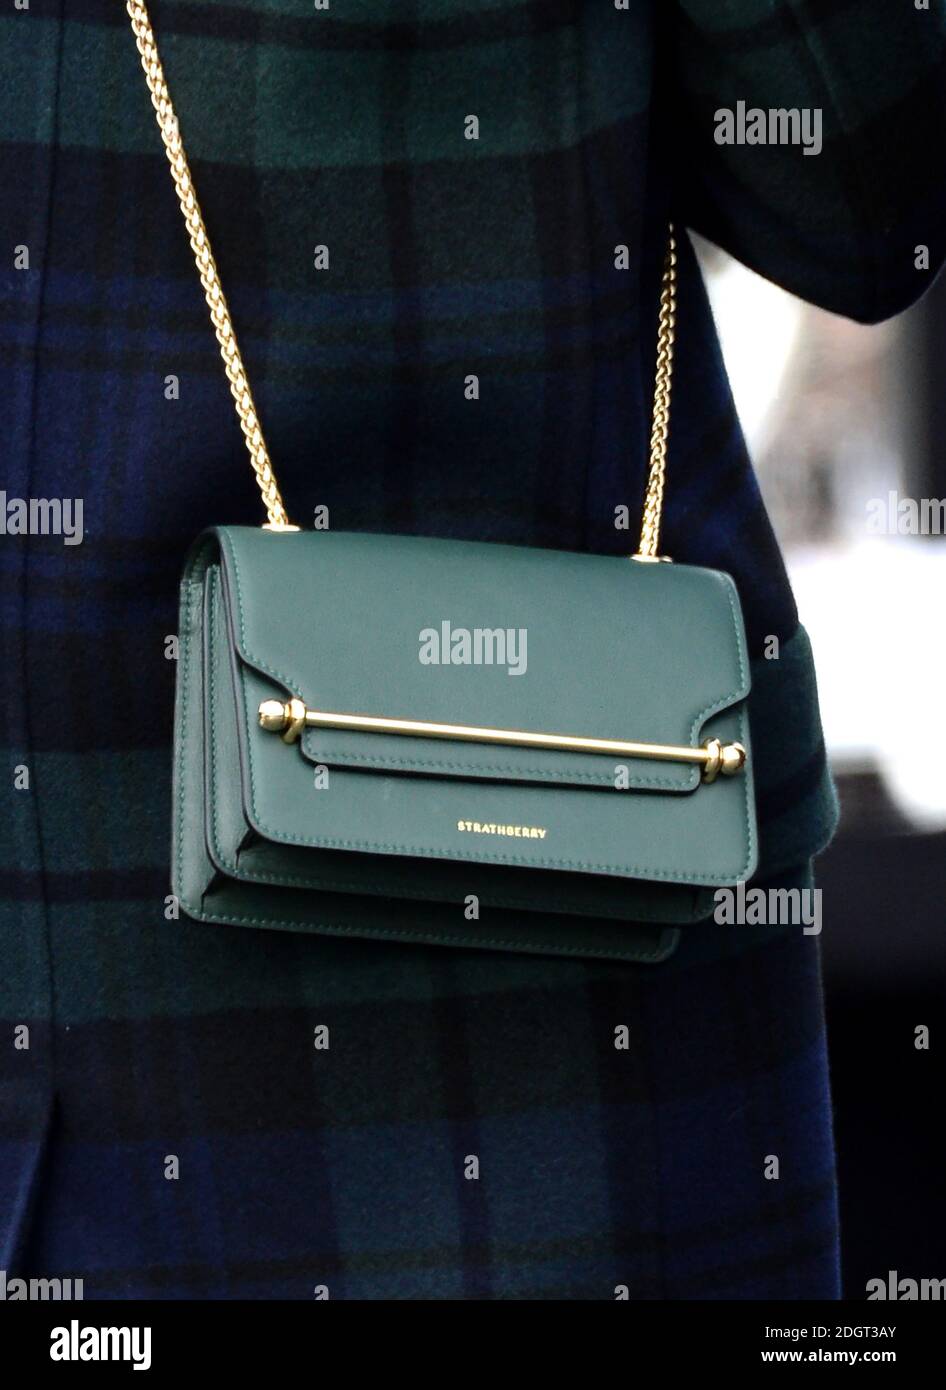 Meghan Markle wears green Strathberry handbag on visit to Edinburgh